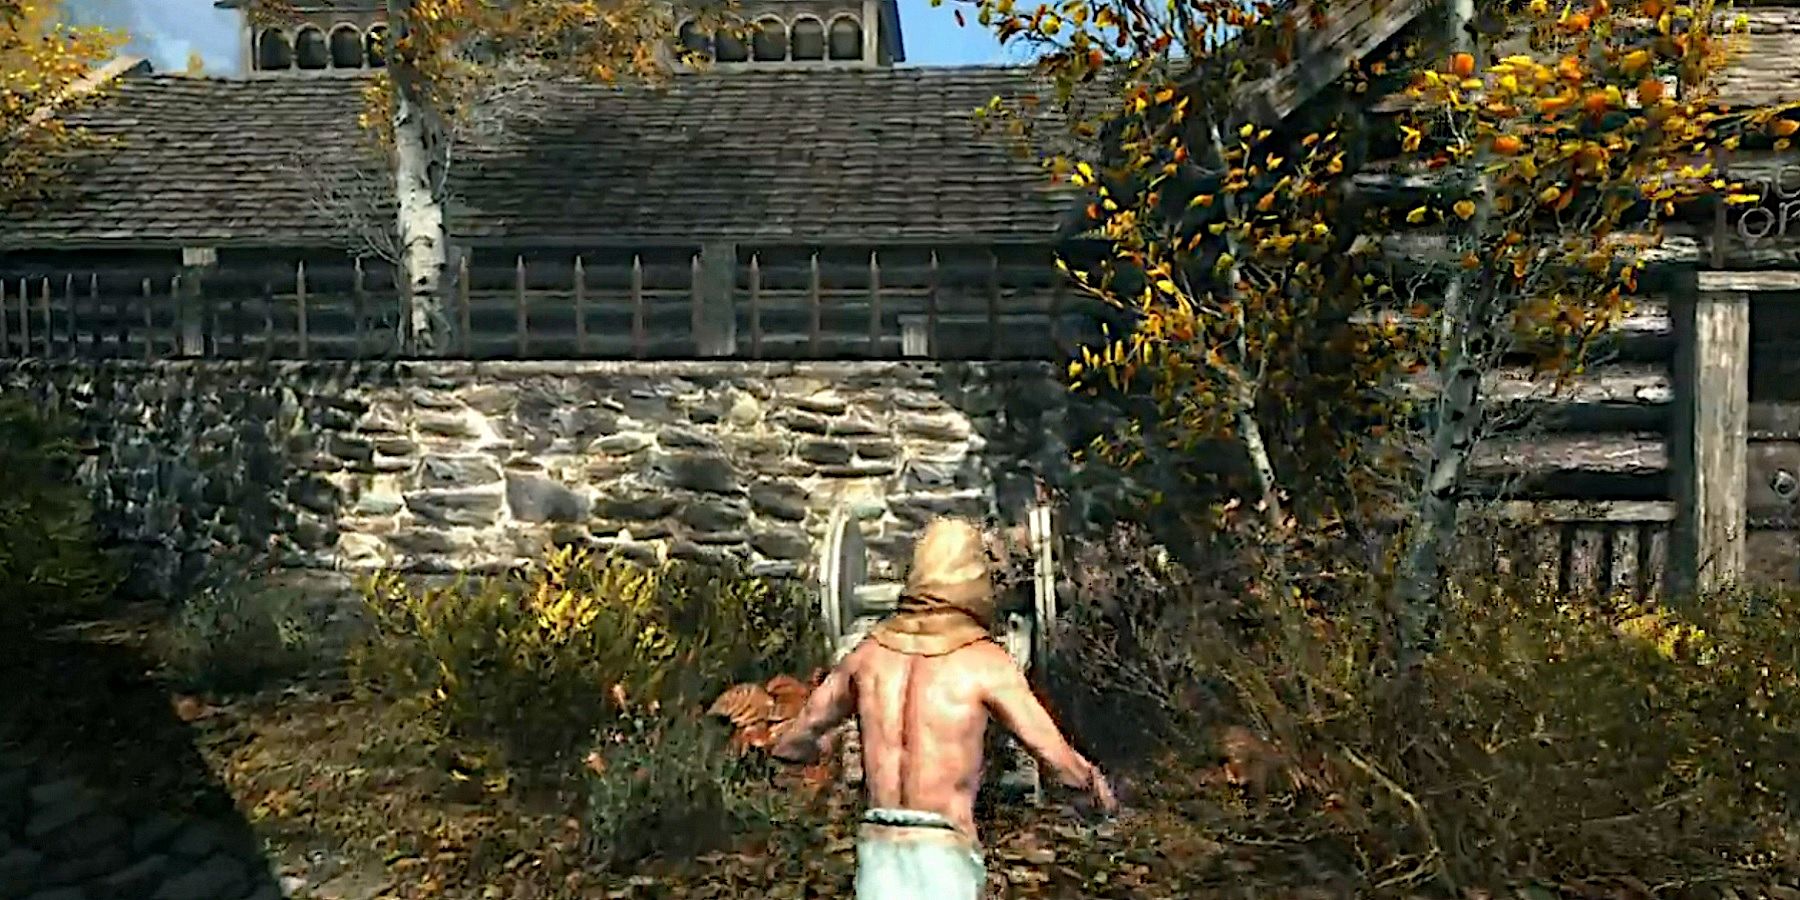 Screenshot from The Elder Scrolls 5: Skyrim showing the player approaching a wheelbarrow.